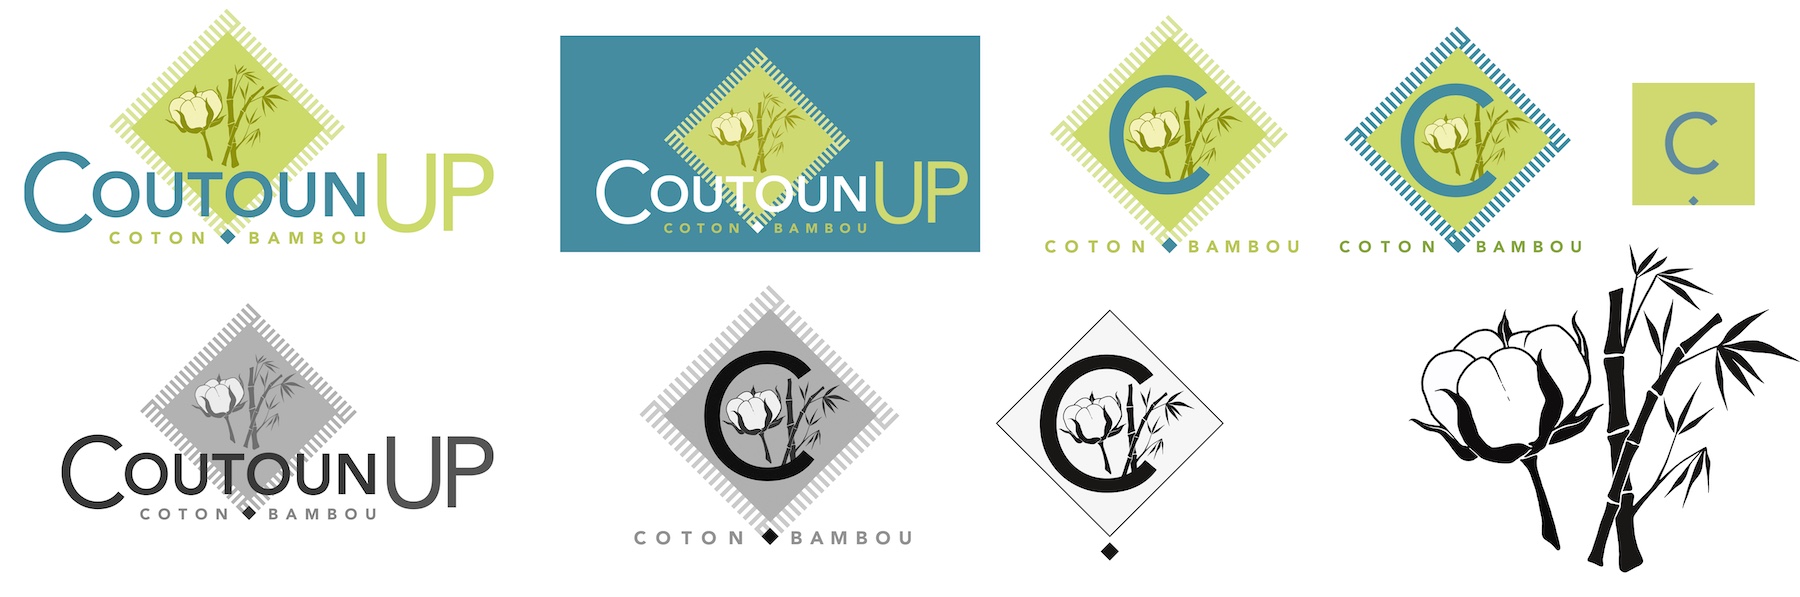 CoutounUp Logos